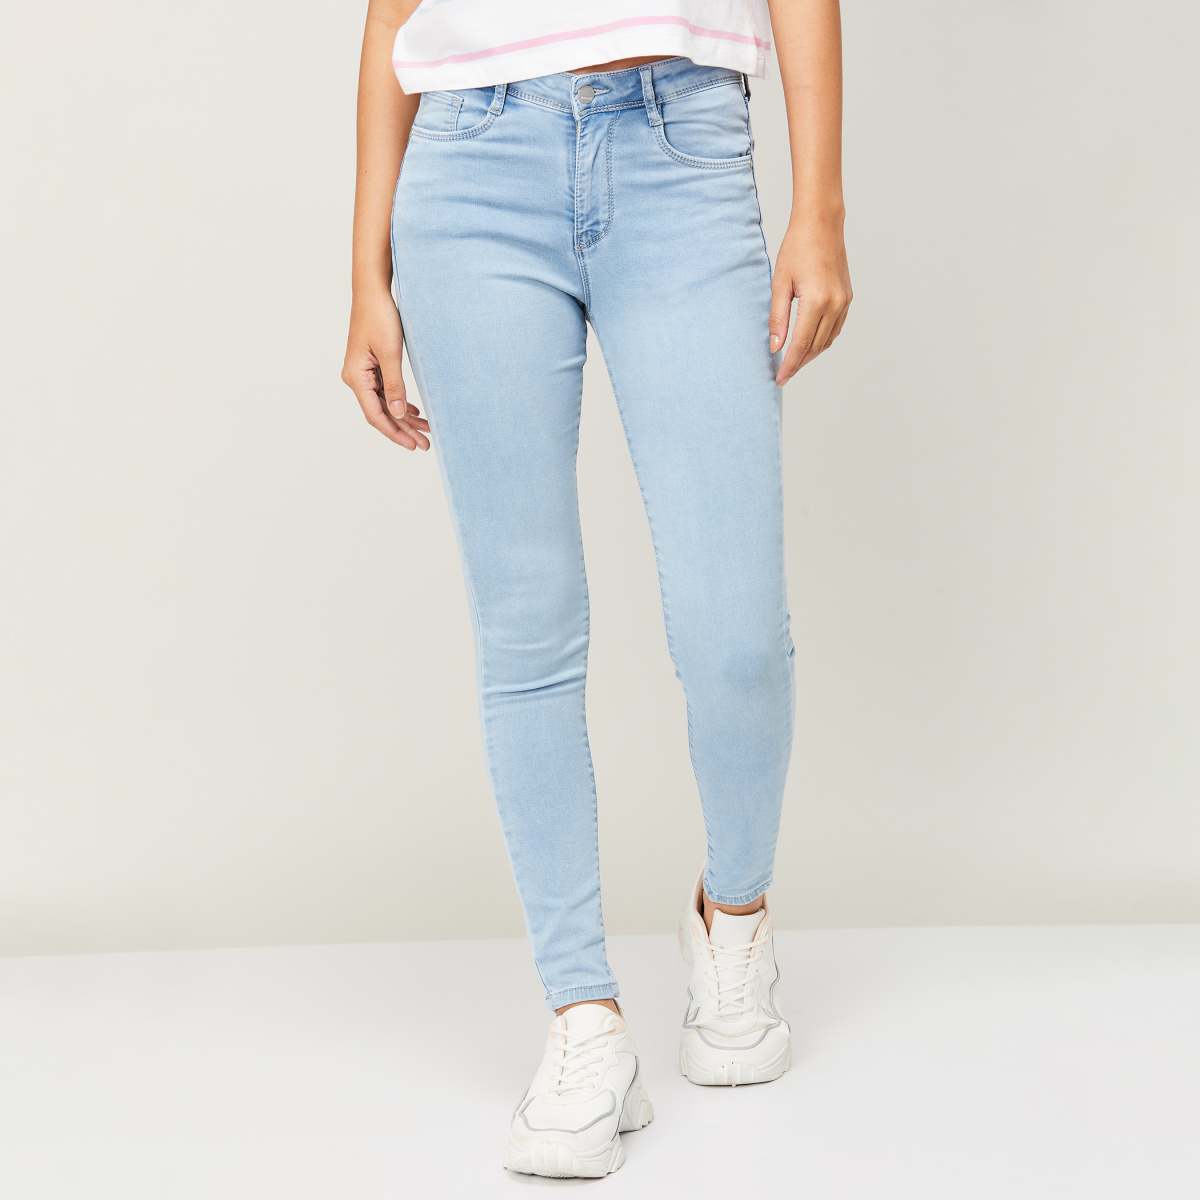 KRAUS Women Solid Skinny Fit Jeans